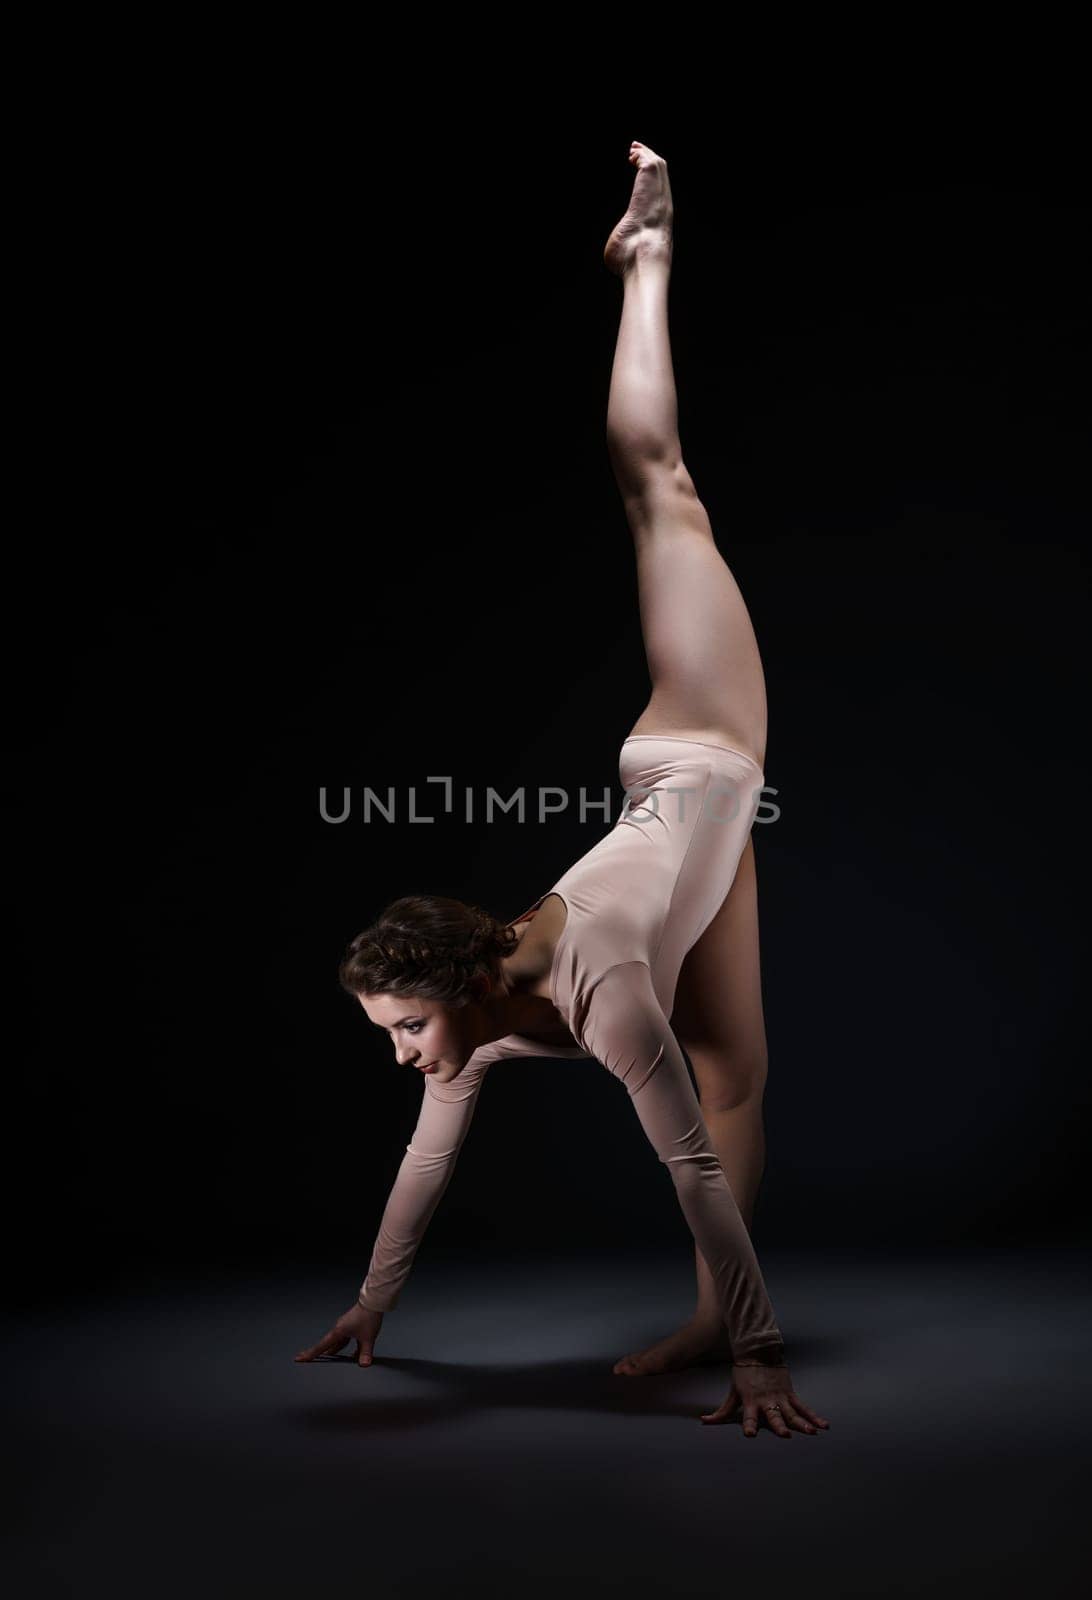 Studio photo of artistic gymnast posing while doing split